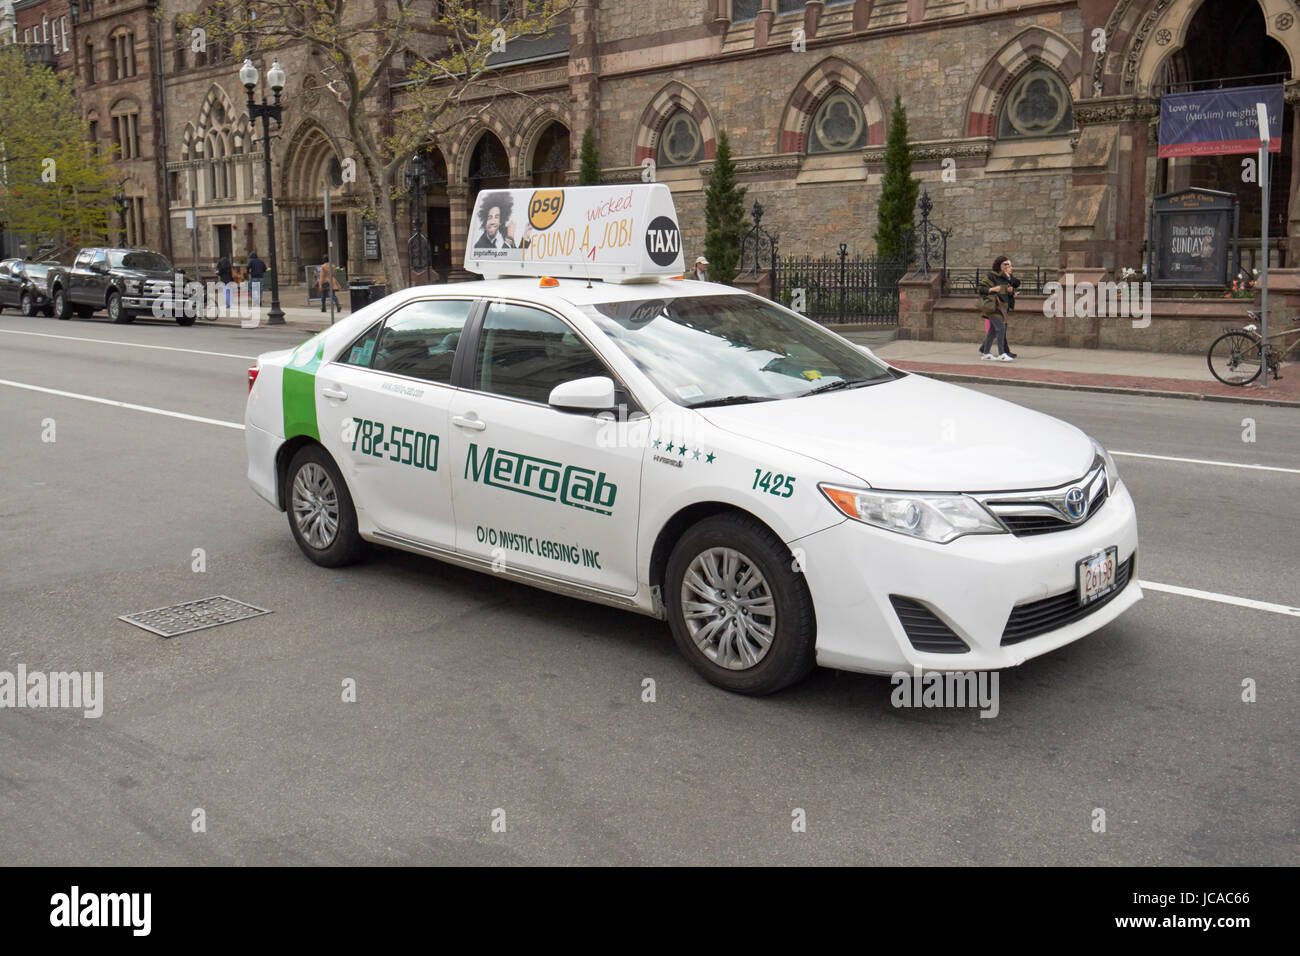 Boston metrocab taxi cab USA Stock Photo